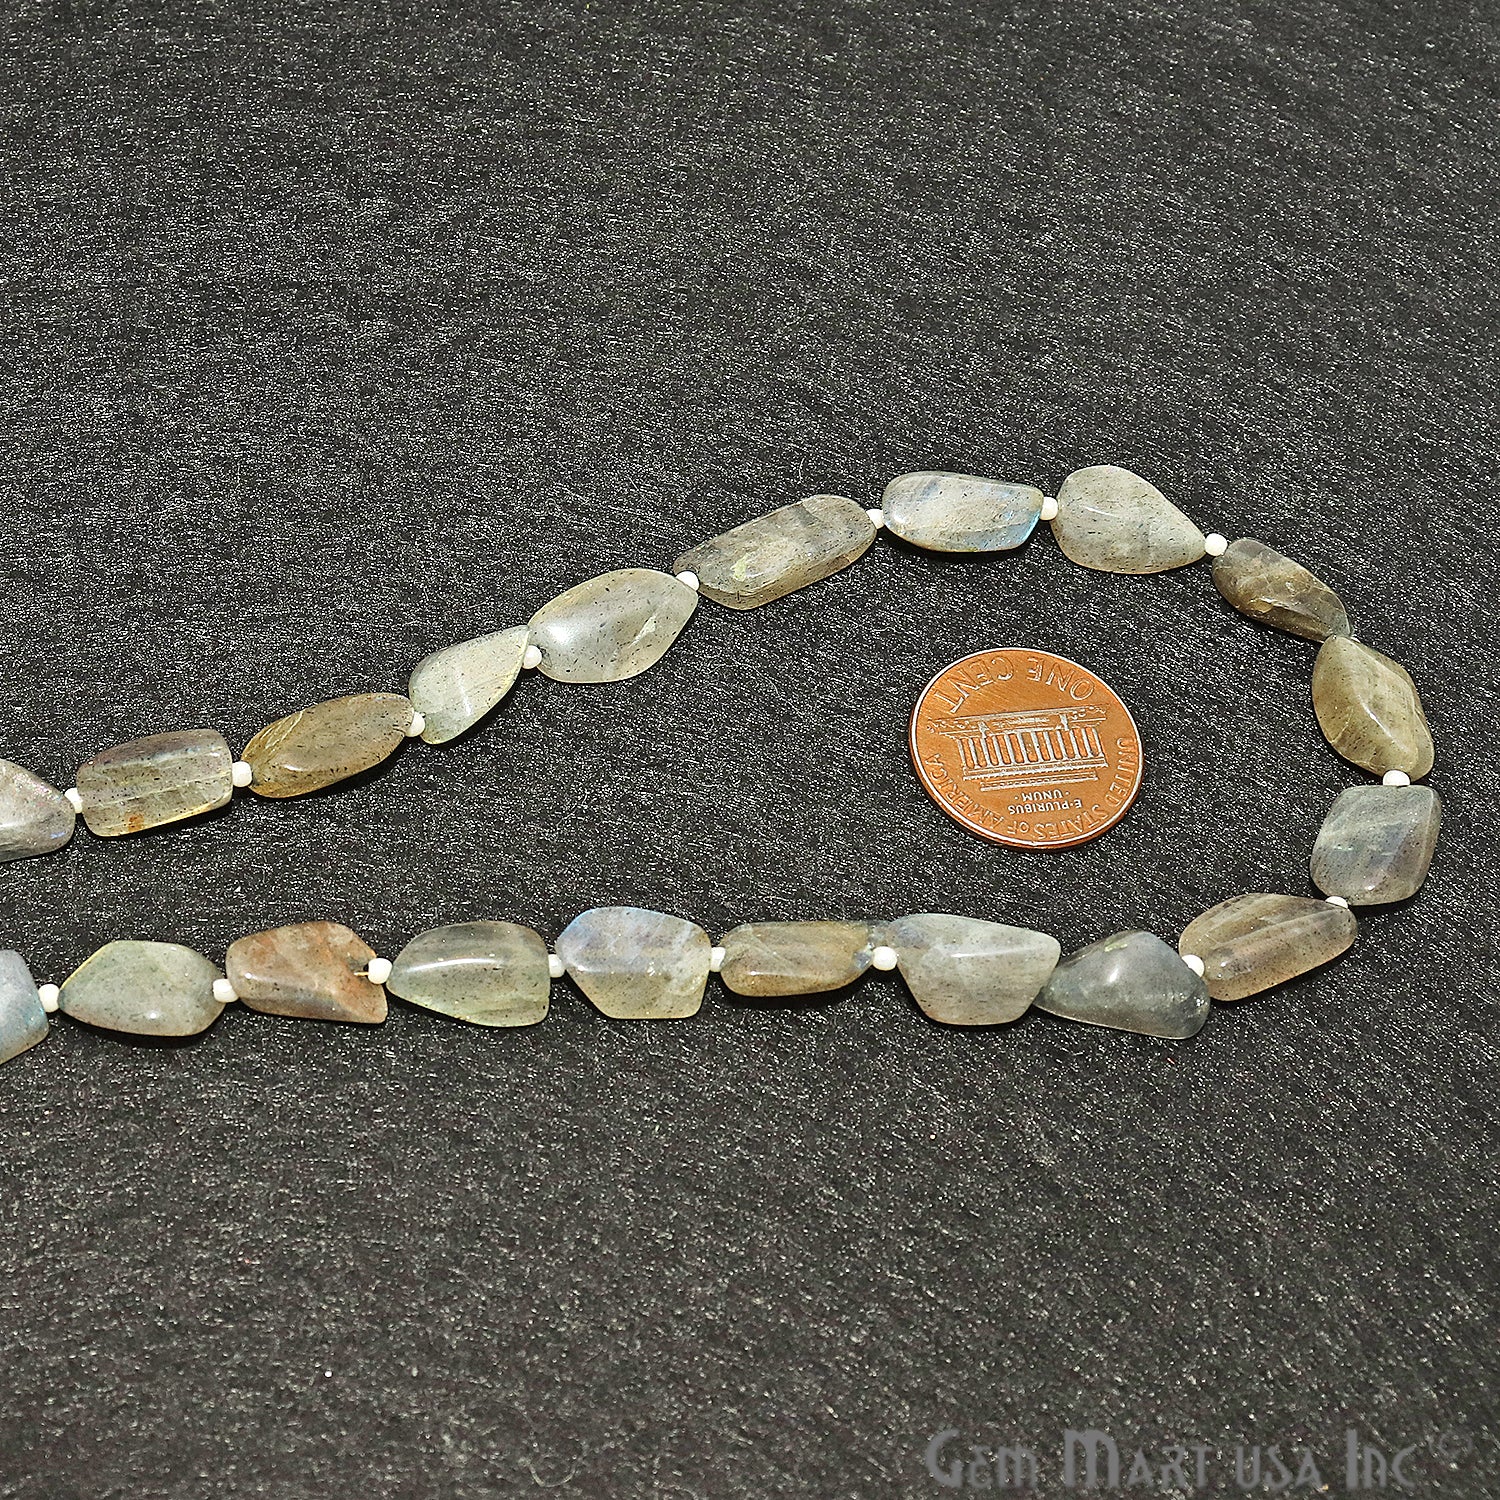 Labradorite Free Form 13x9mm Tumble Beads Gemstone Strands - GemMartUSA